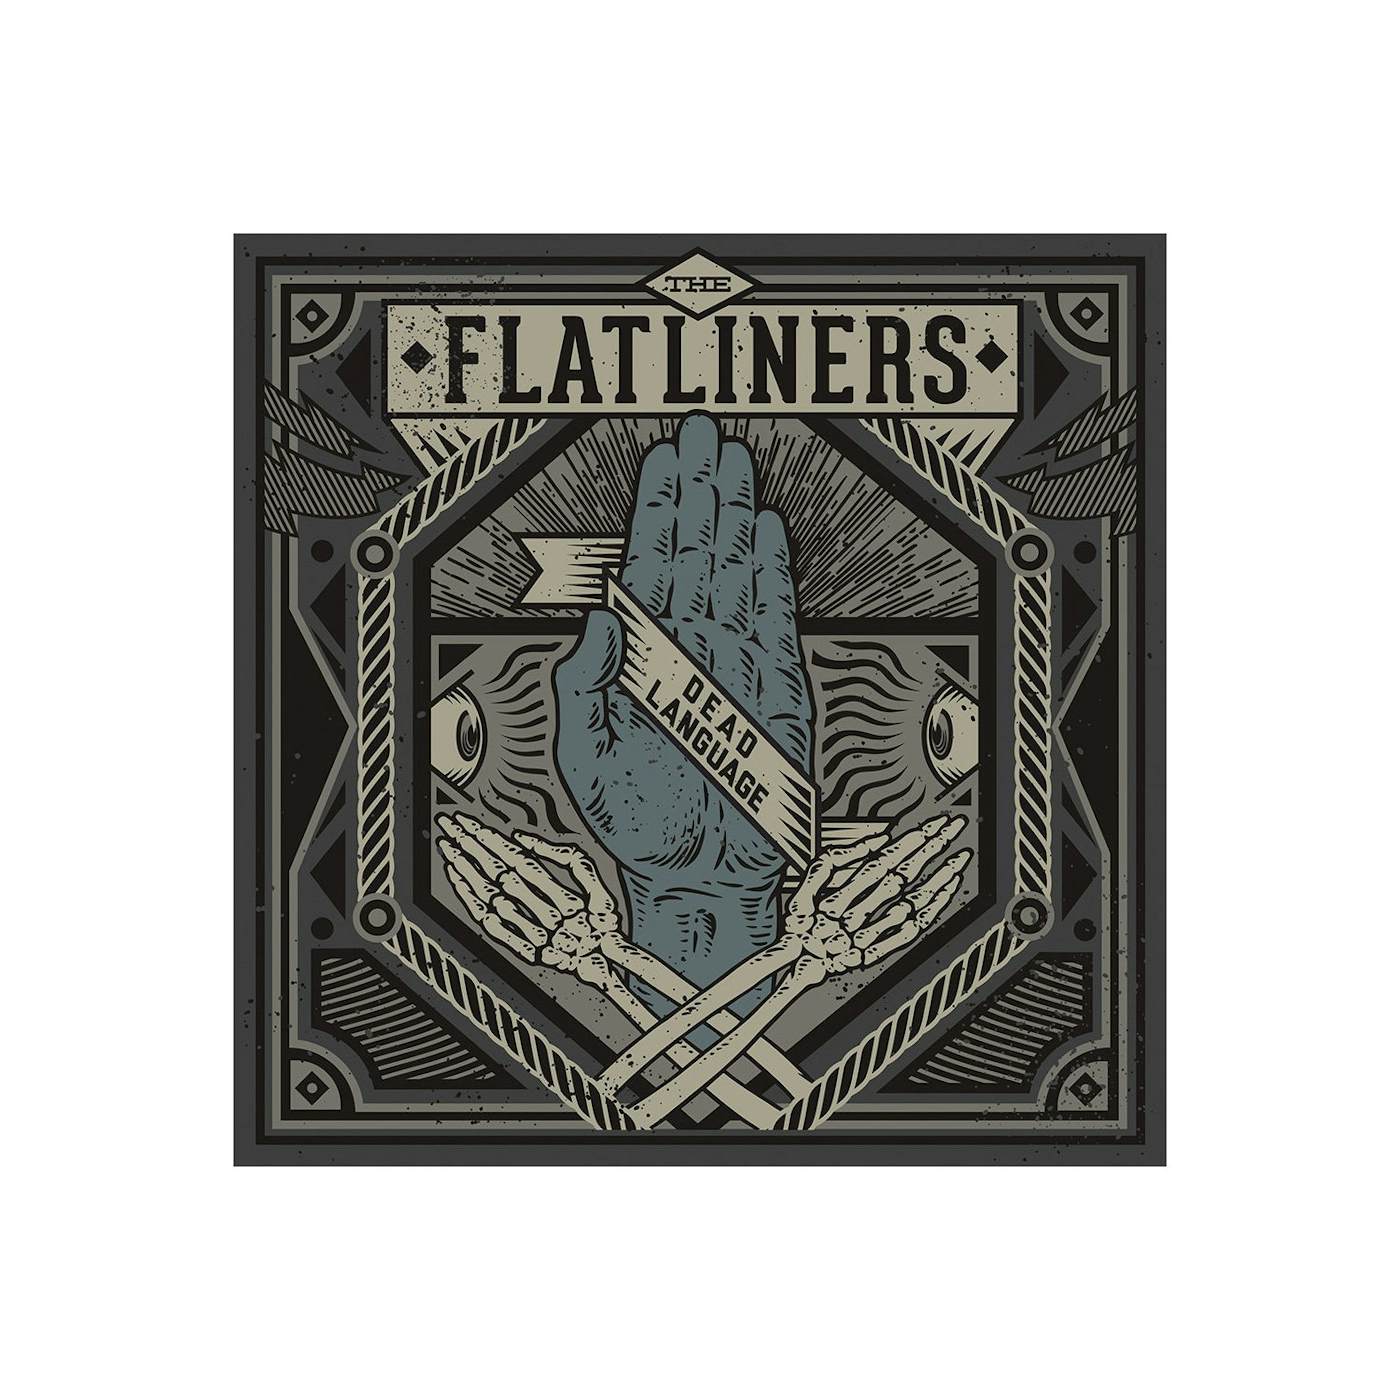 The Flatliners Dead Language CD